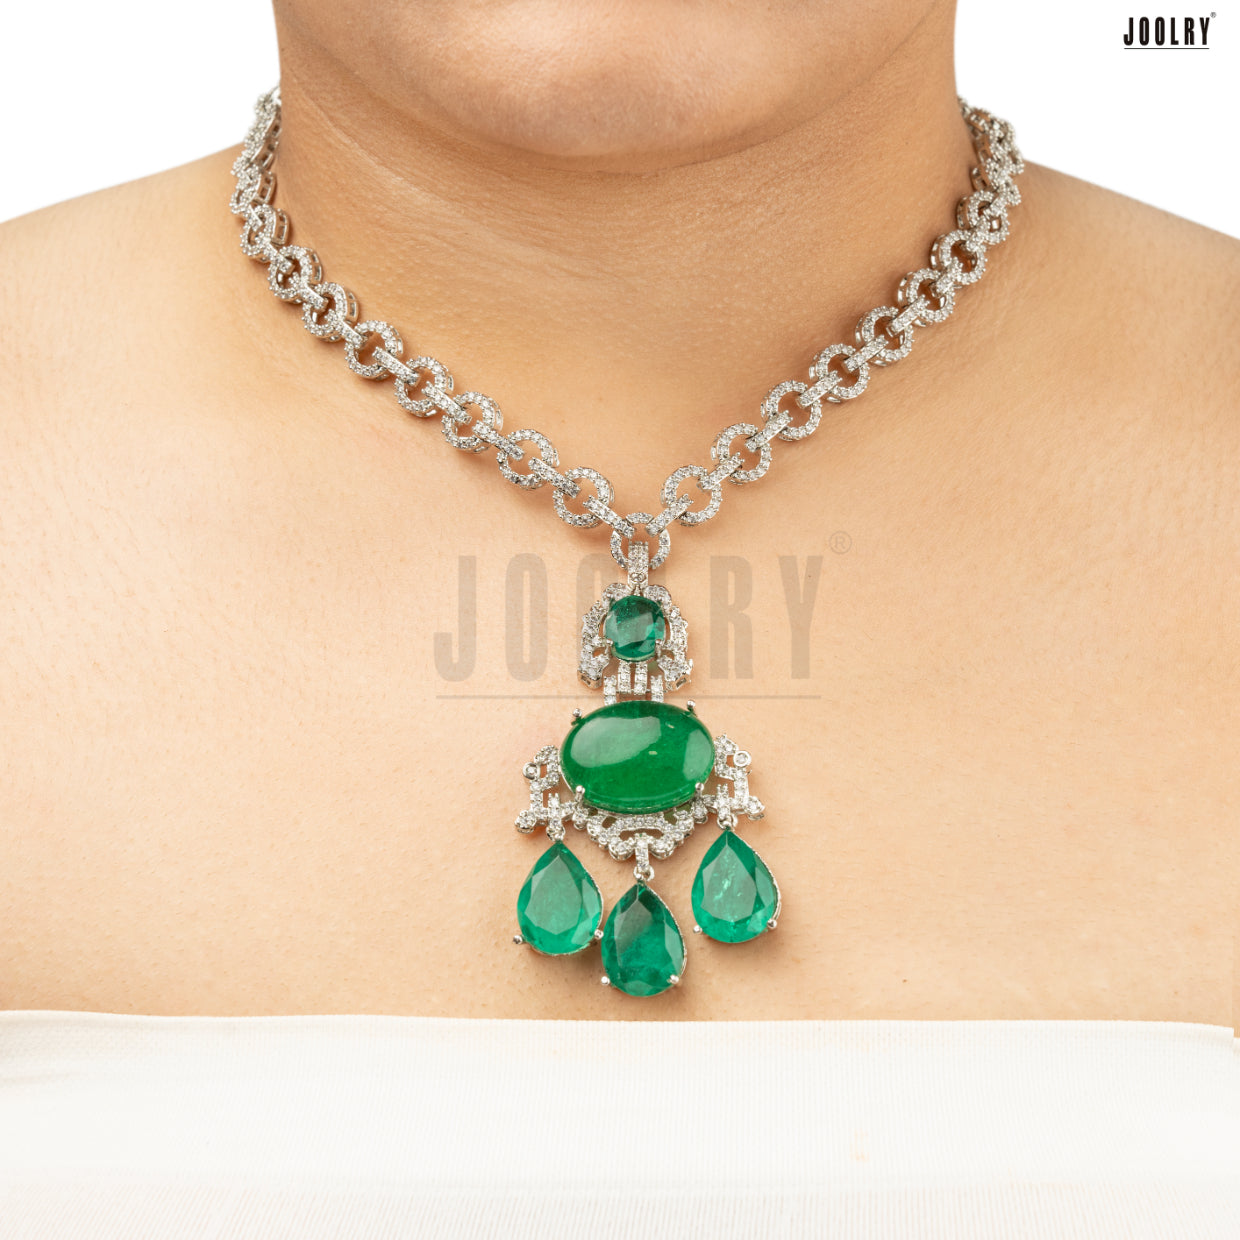 The green joyeria necklace set